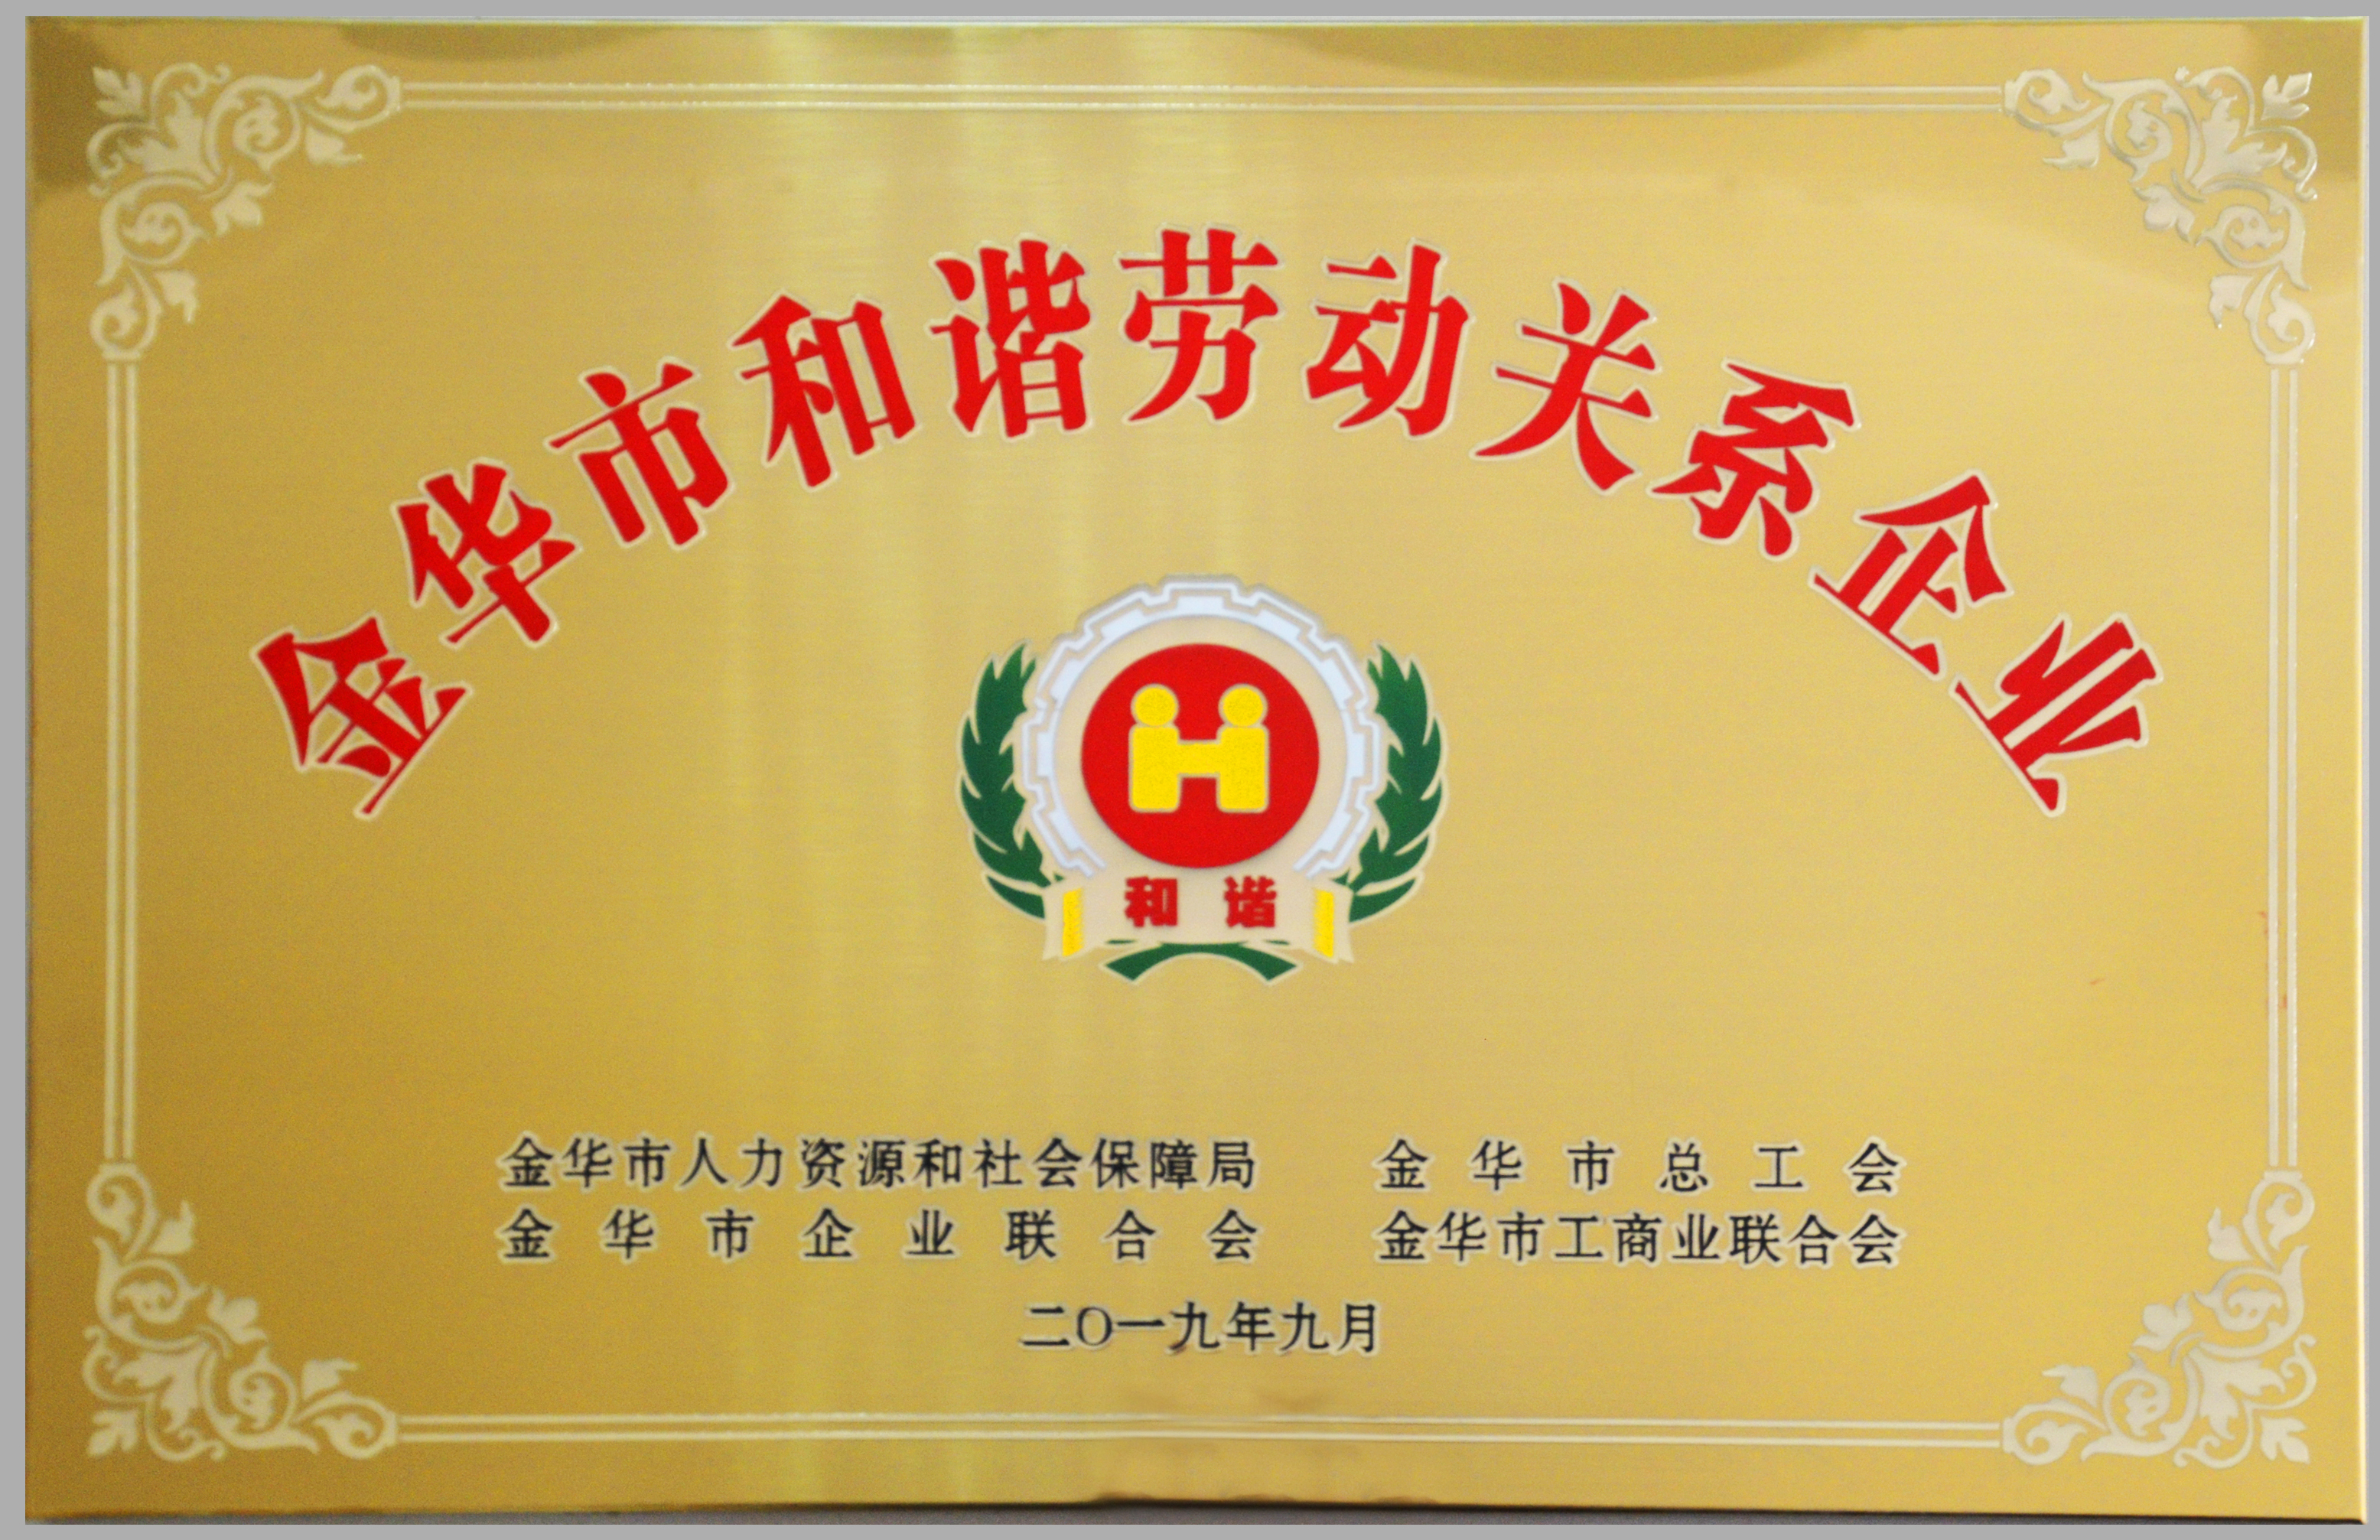 the harmonious labor relations enterprise in jinhua